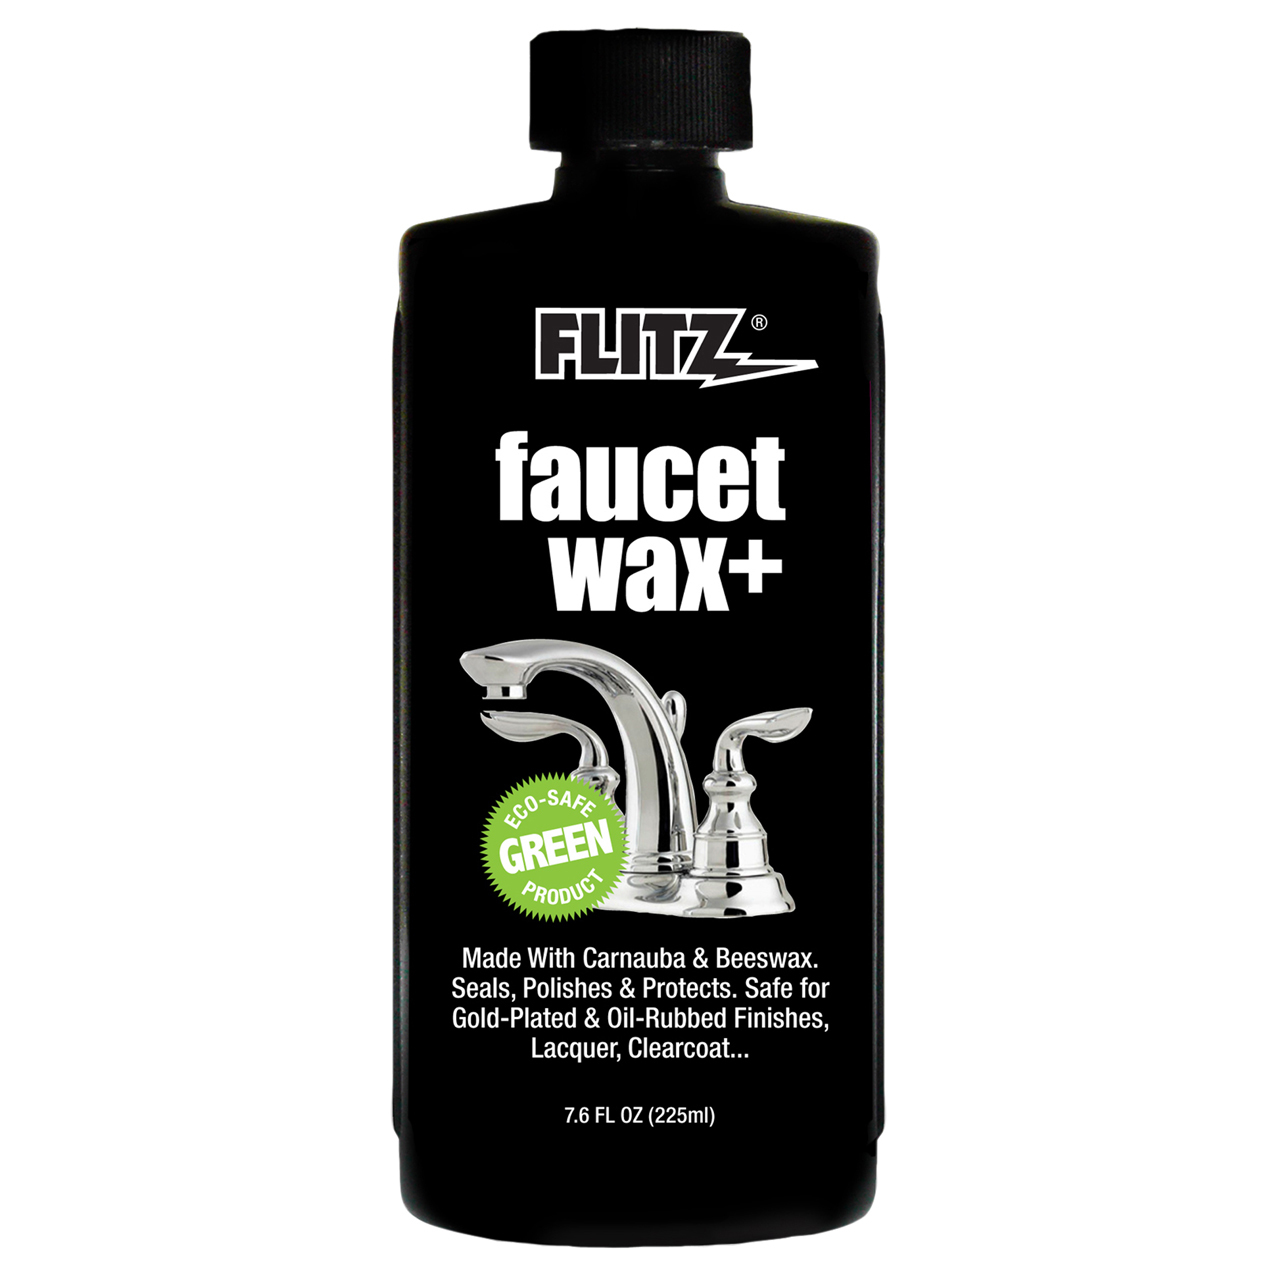 Flitz Faucet Wax Plus